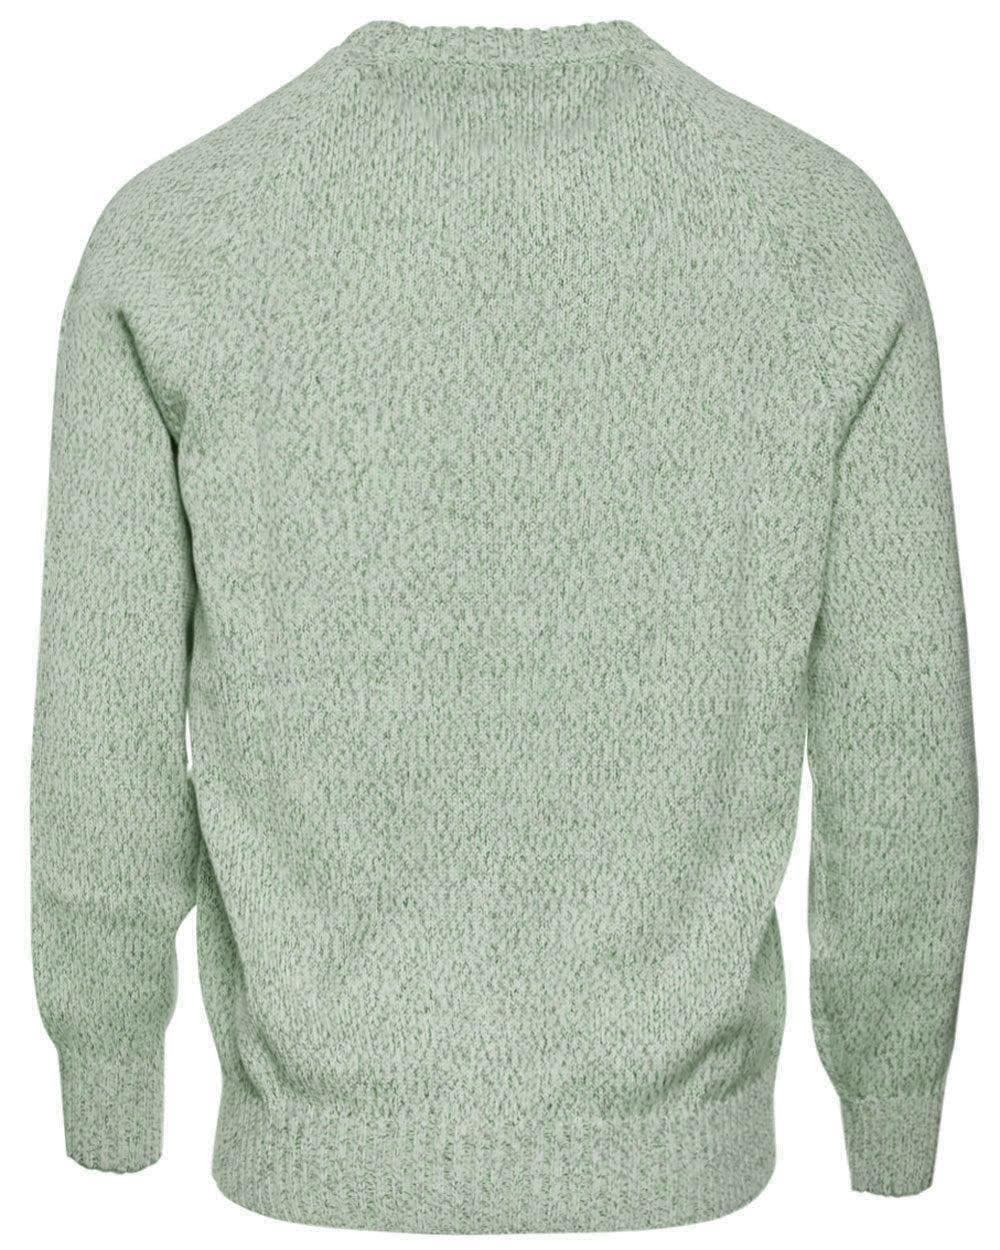 Green Melange Cotton Sweater